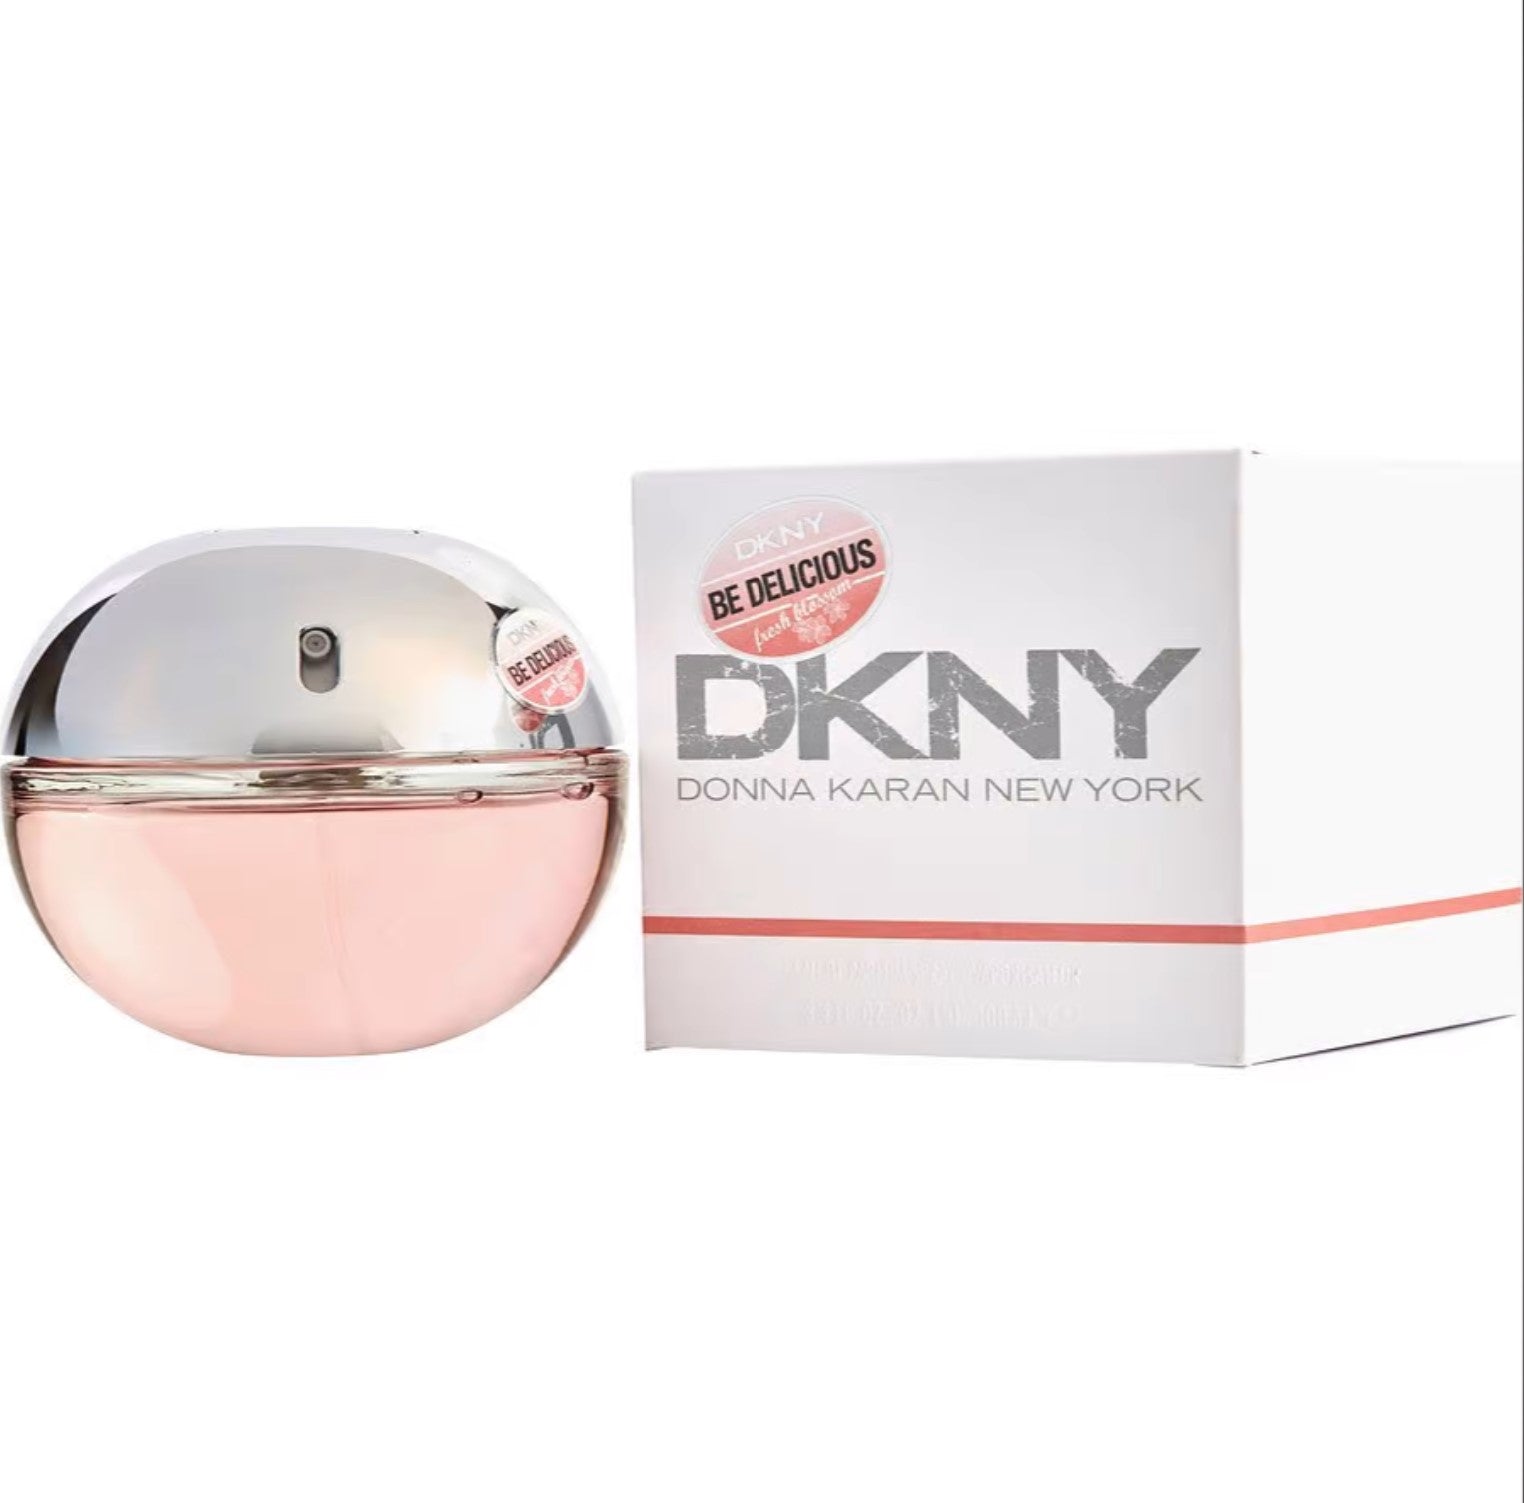 Дикинвай духи. DKNY духи Fresh Blossom. DKNY be delicious Fresh Blossom (Donna Karan) 100мл. Be delicious Fresh (Donna Karan) 100мл. Туалетная вода Донна Каран Нью-Йорк.